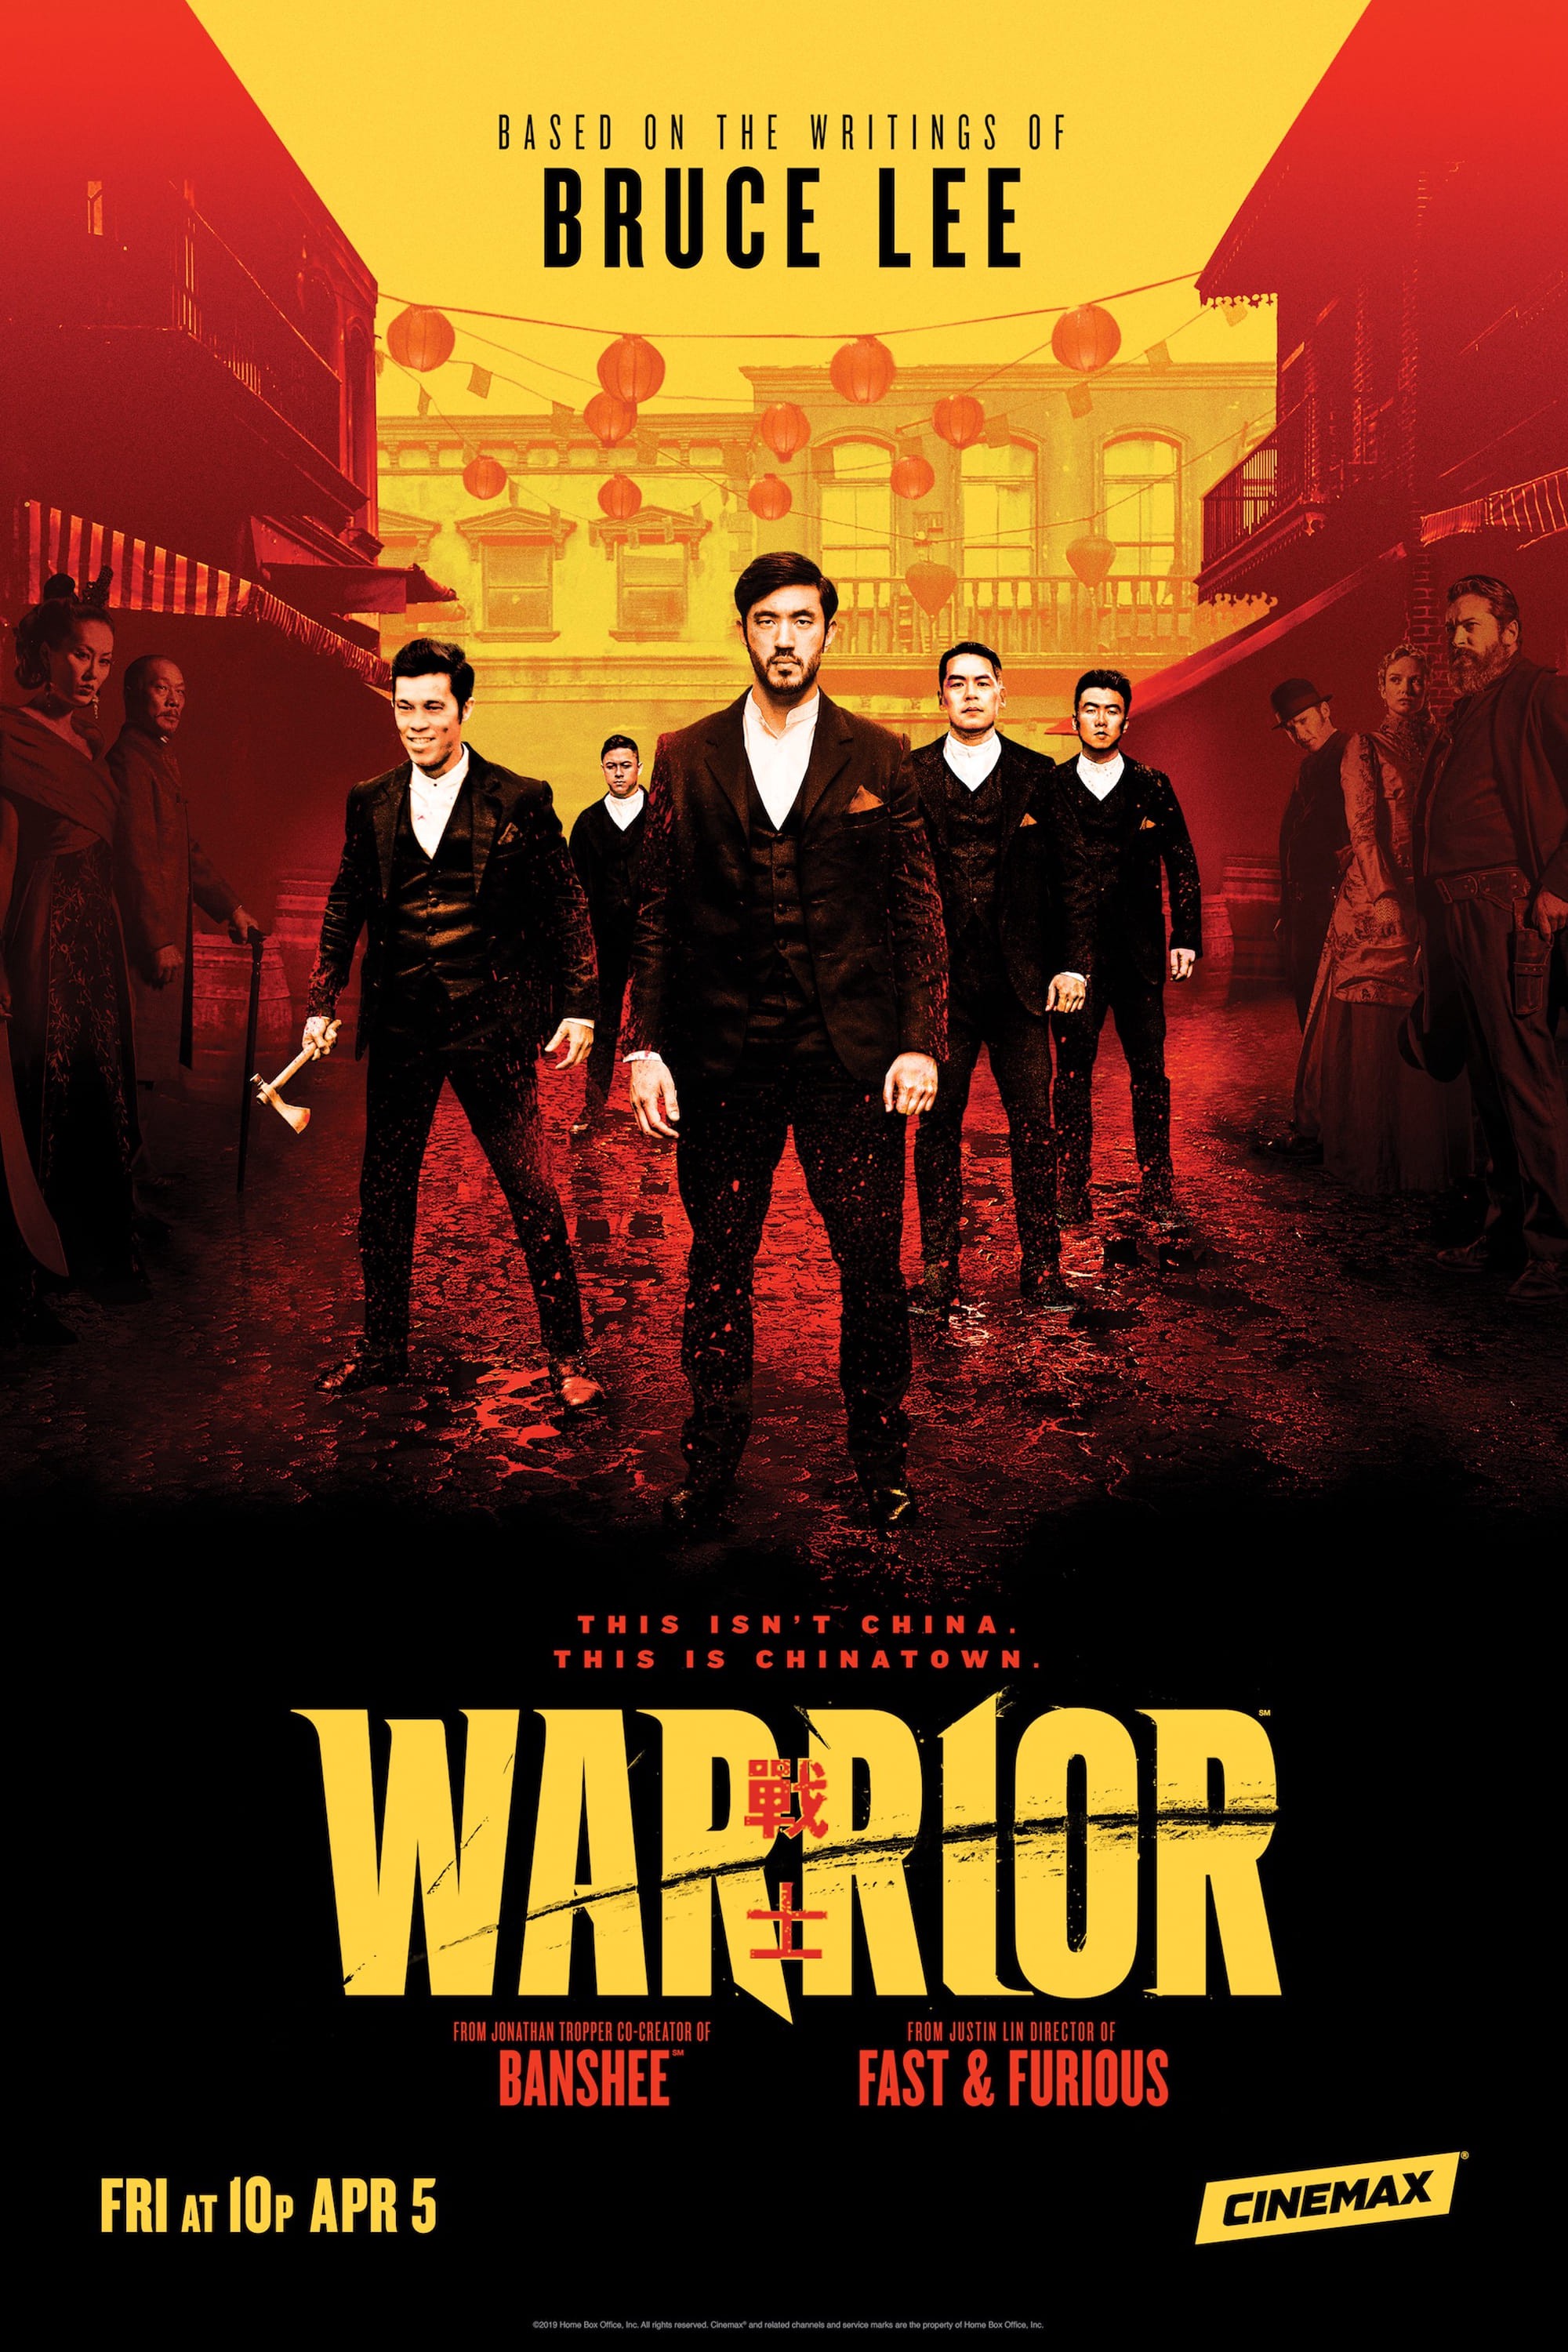 Warrior season 3: Warrior Season 3 Episode 5: Check release date